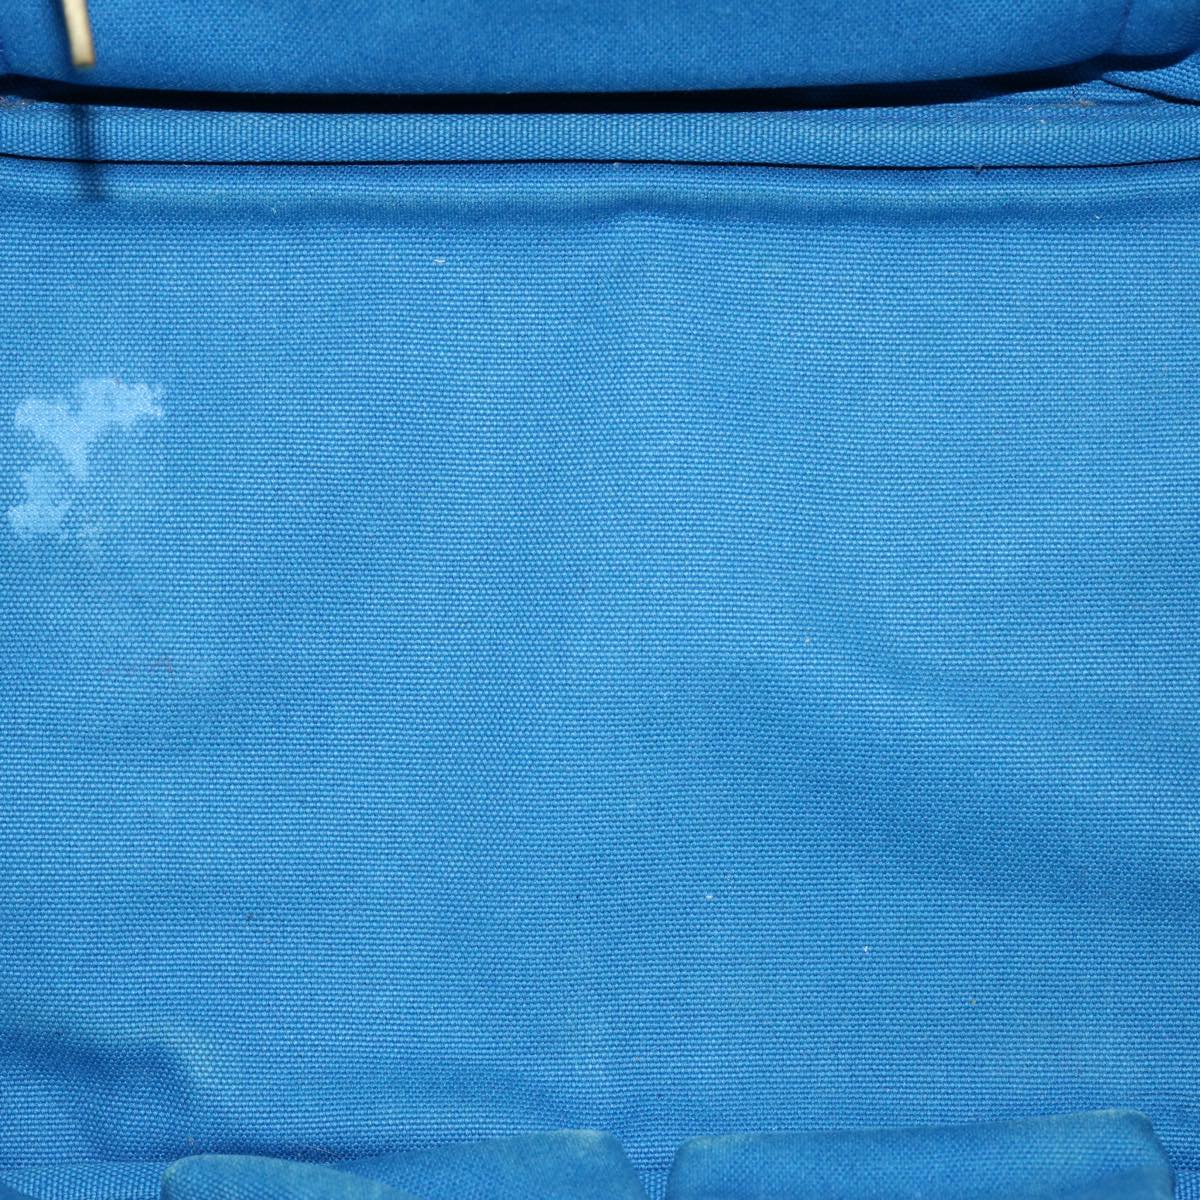 PRADA Canapa MM Hand Bag Canvas Blue Auth ep2510